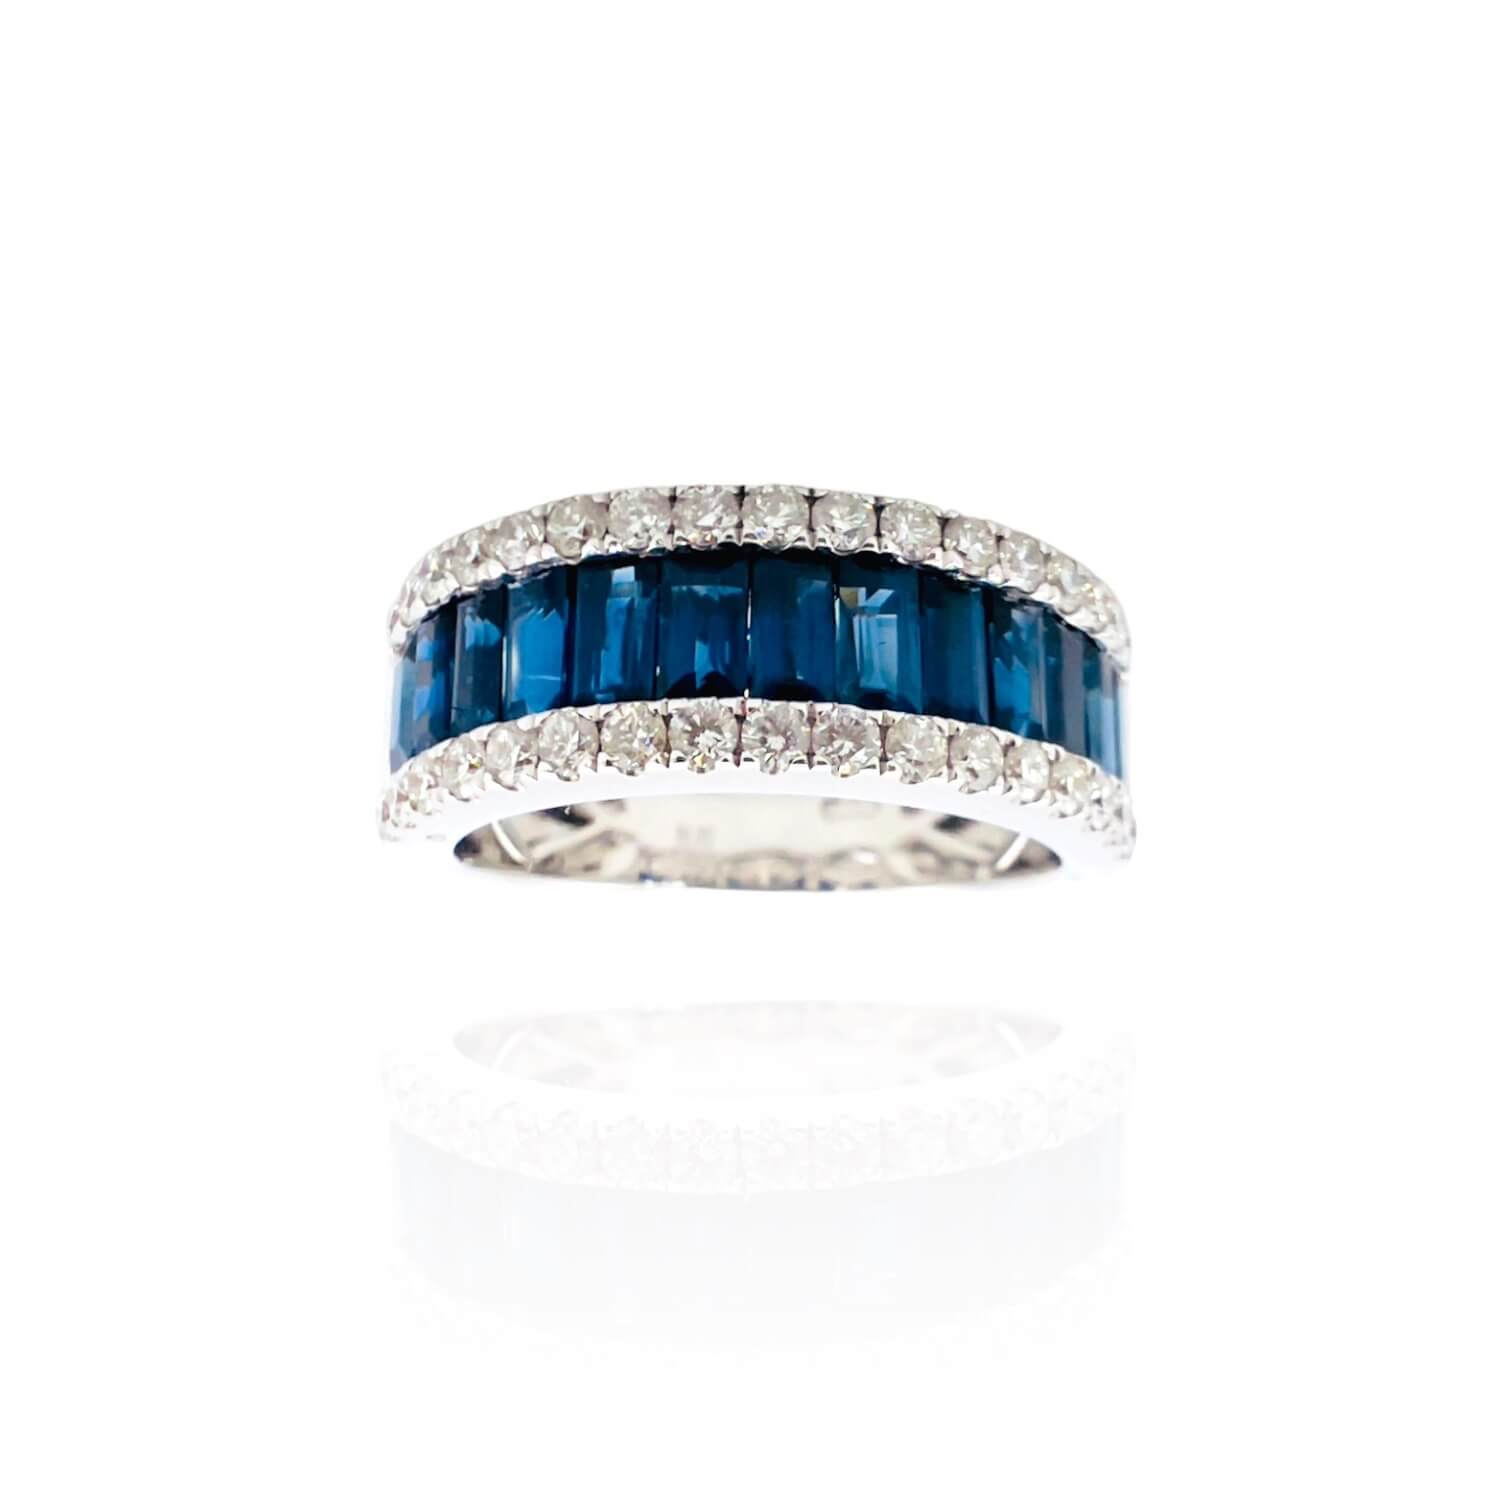 Blue diamond and gold sapphire ring Belle Epoque Art. 12511R02W